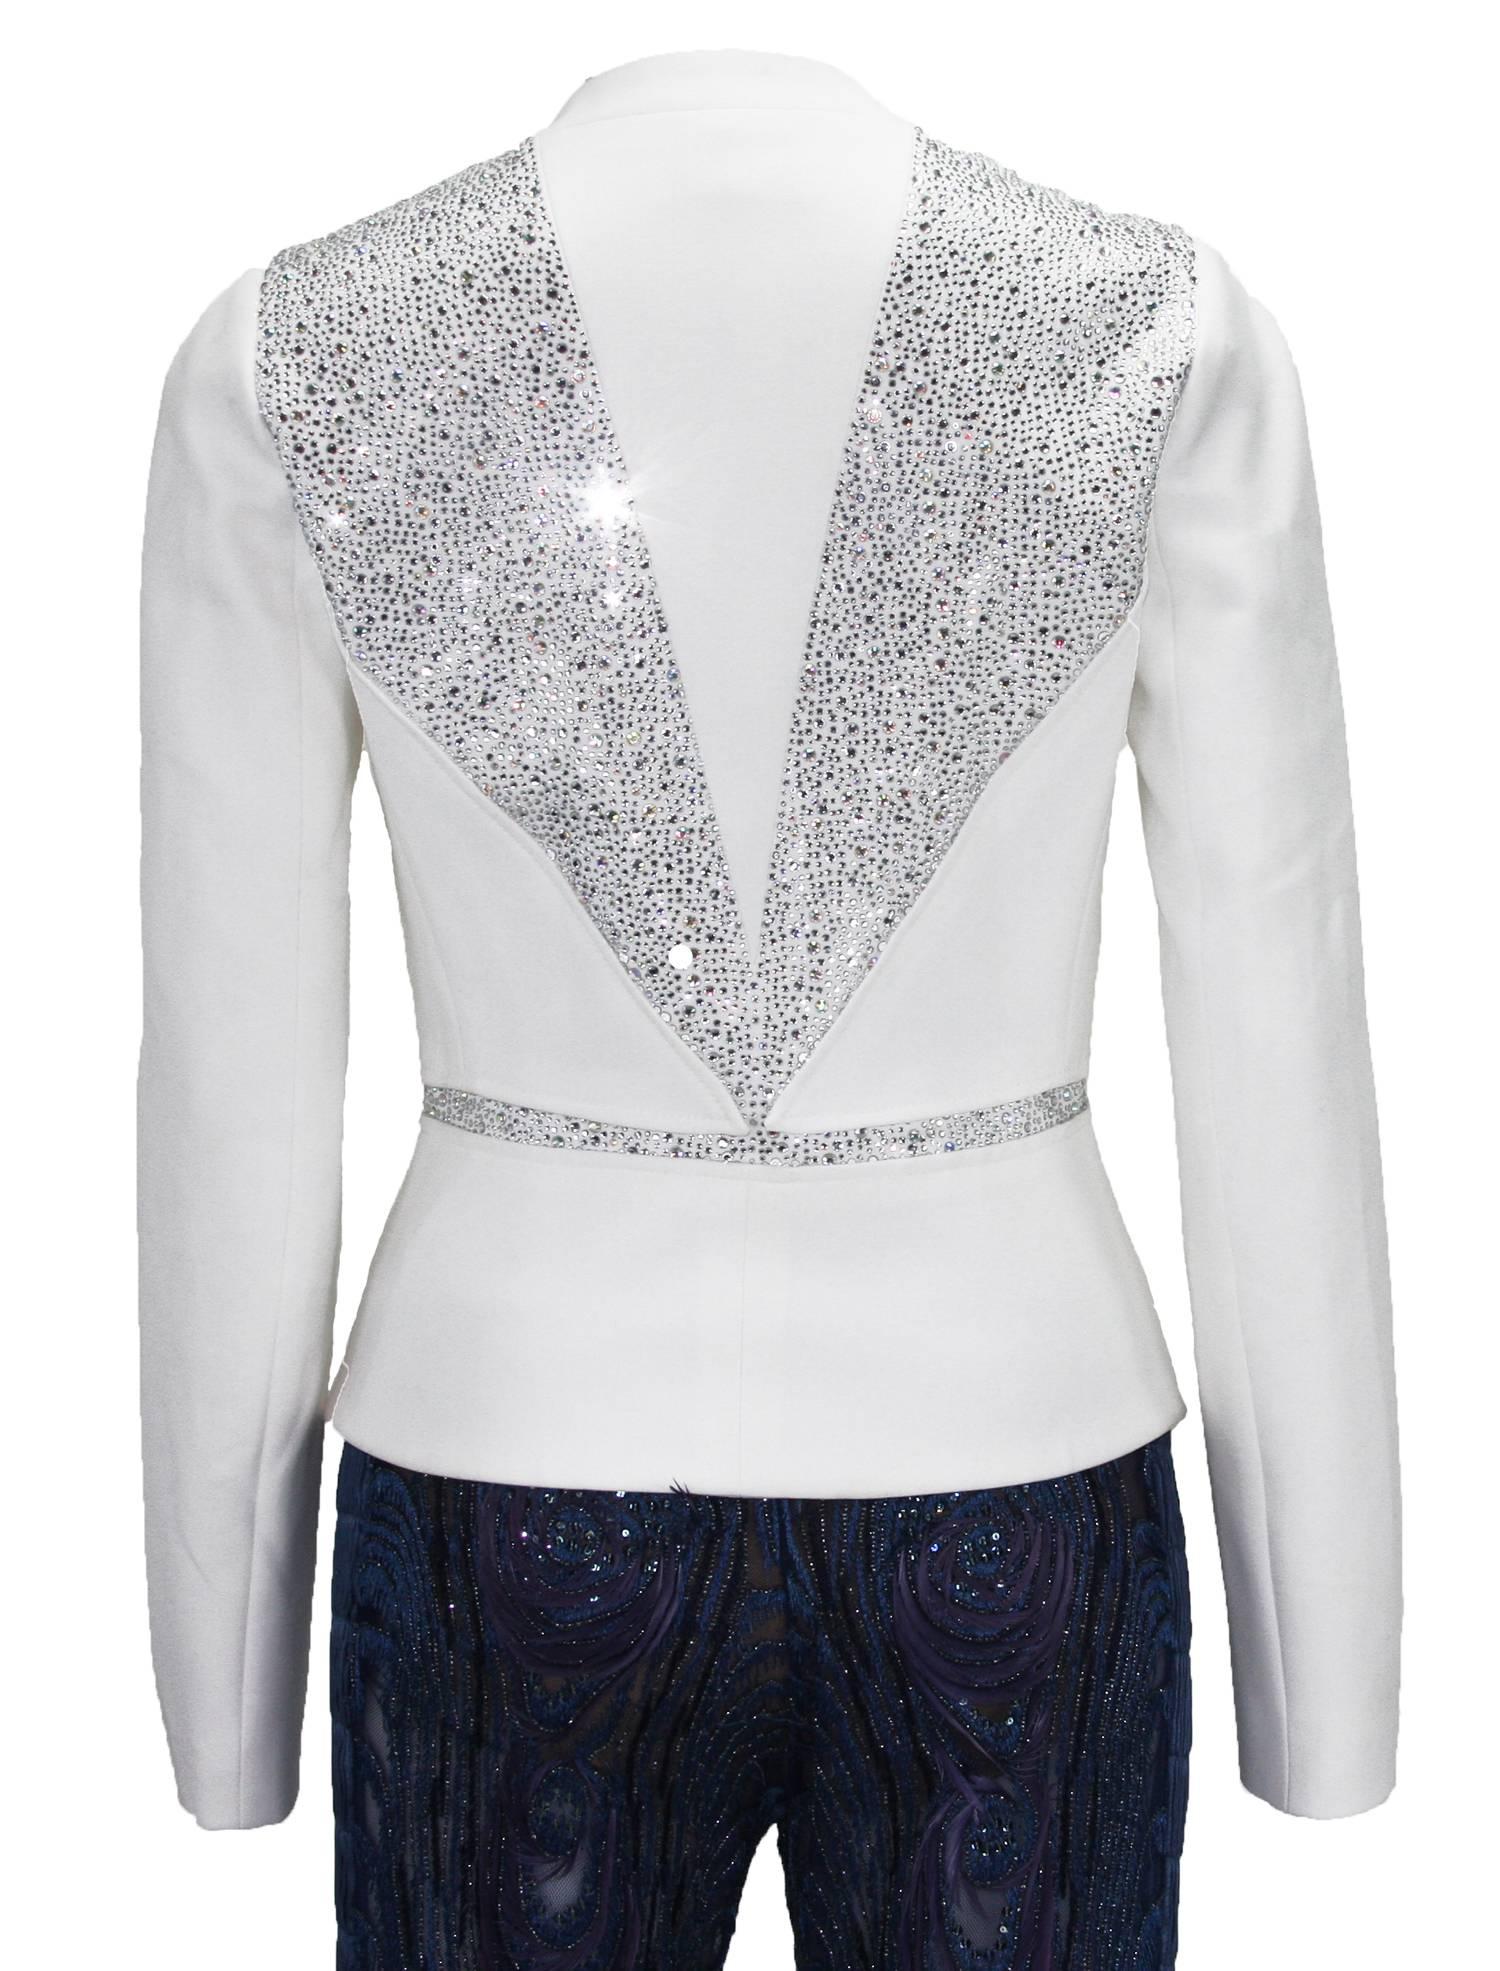 New Versace Crystal Embellished White Blazer Jacket  It. 38 - US 4 For Sale 1